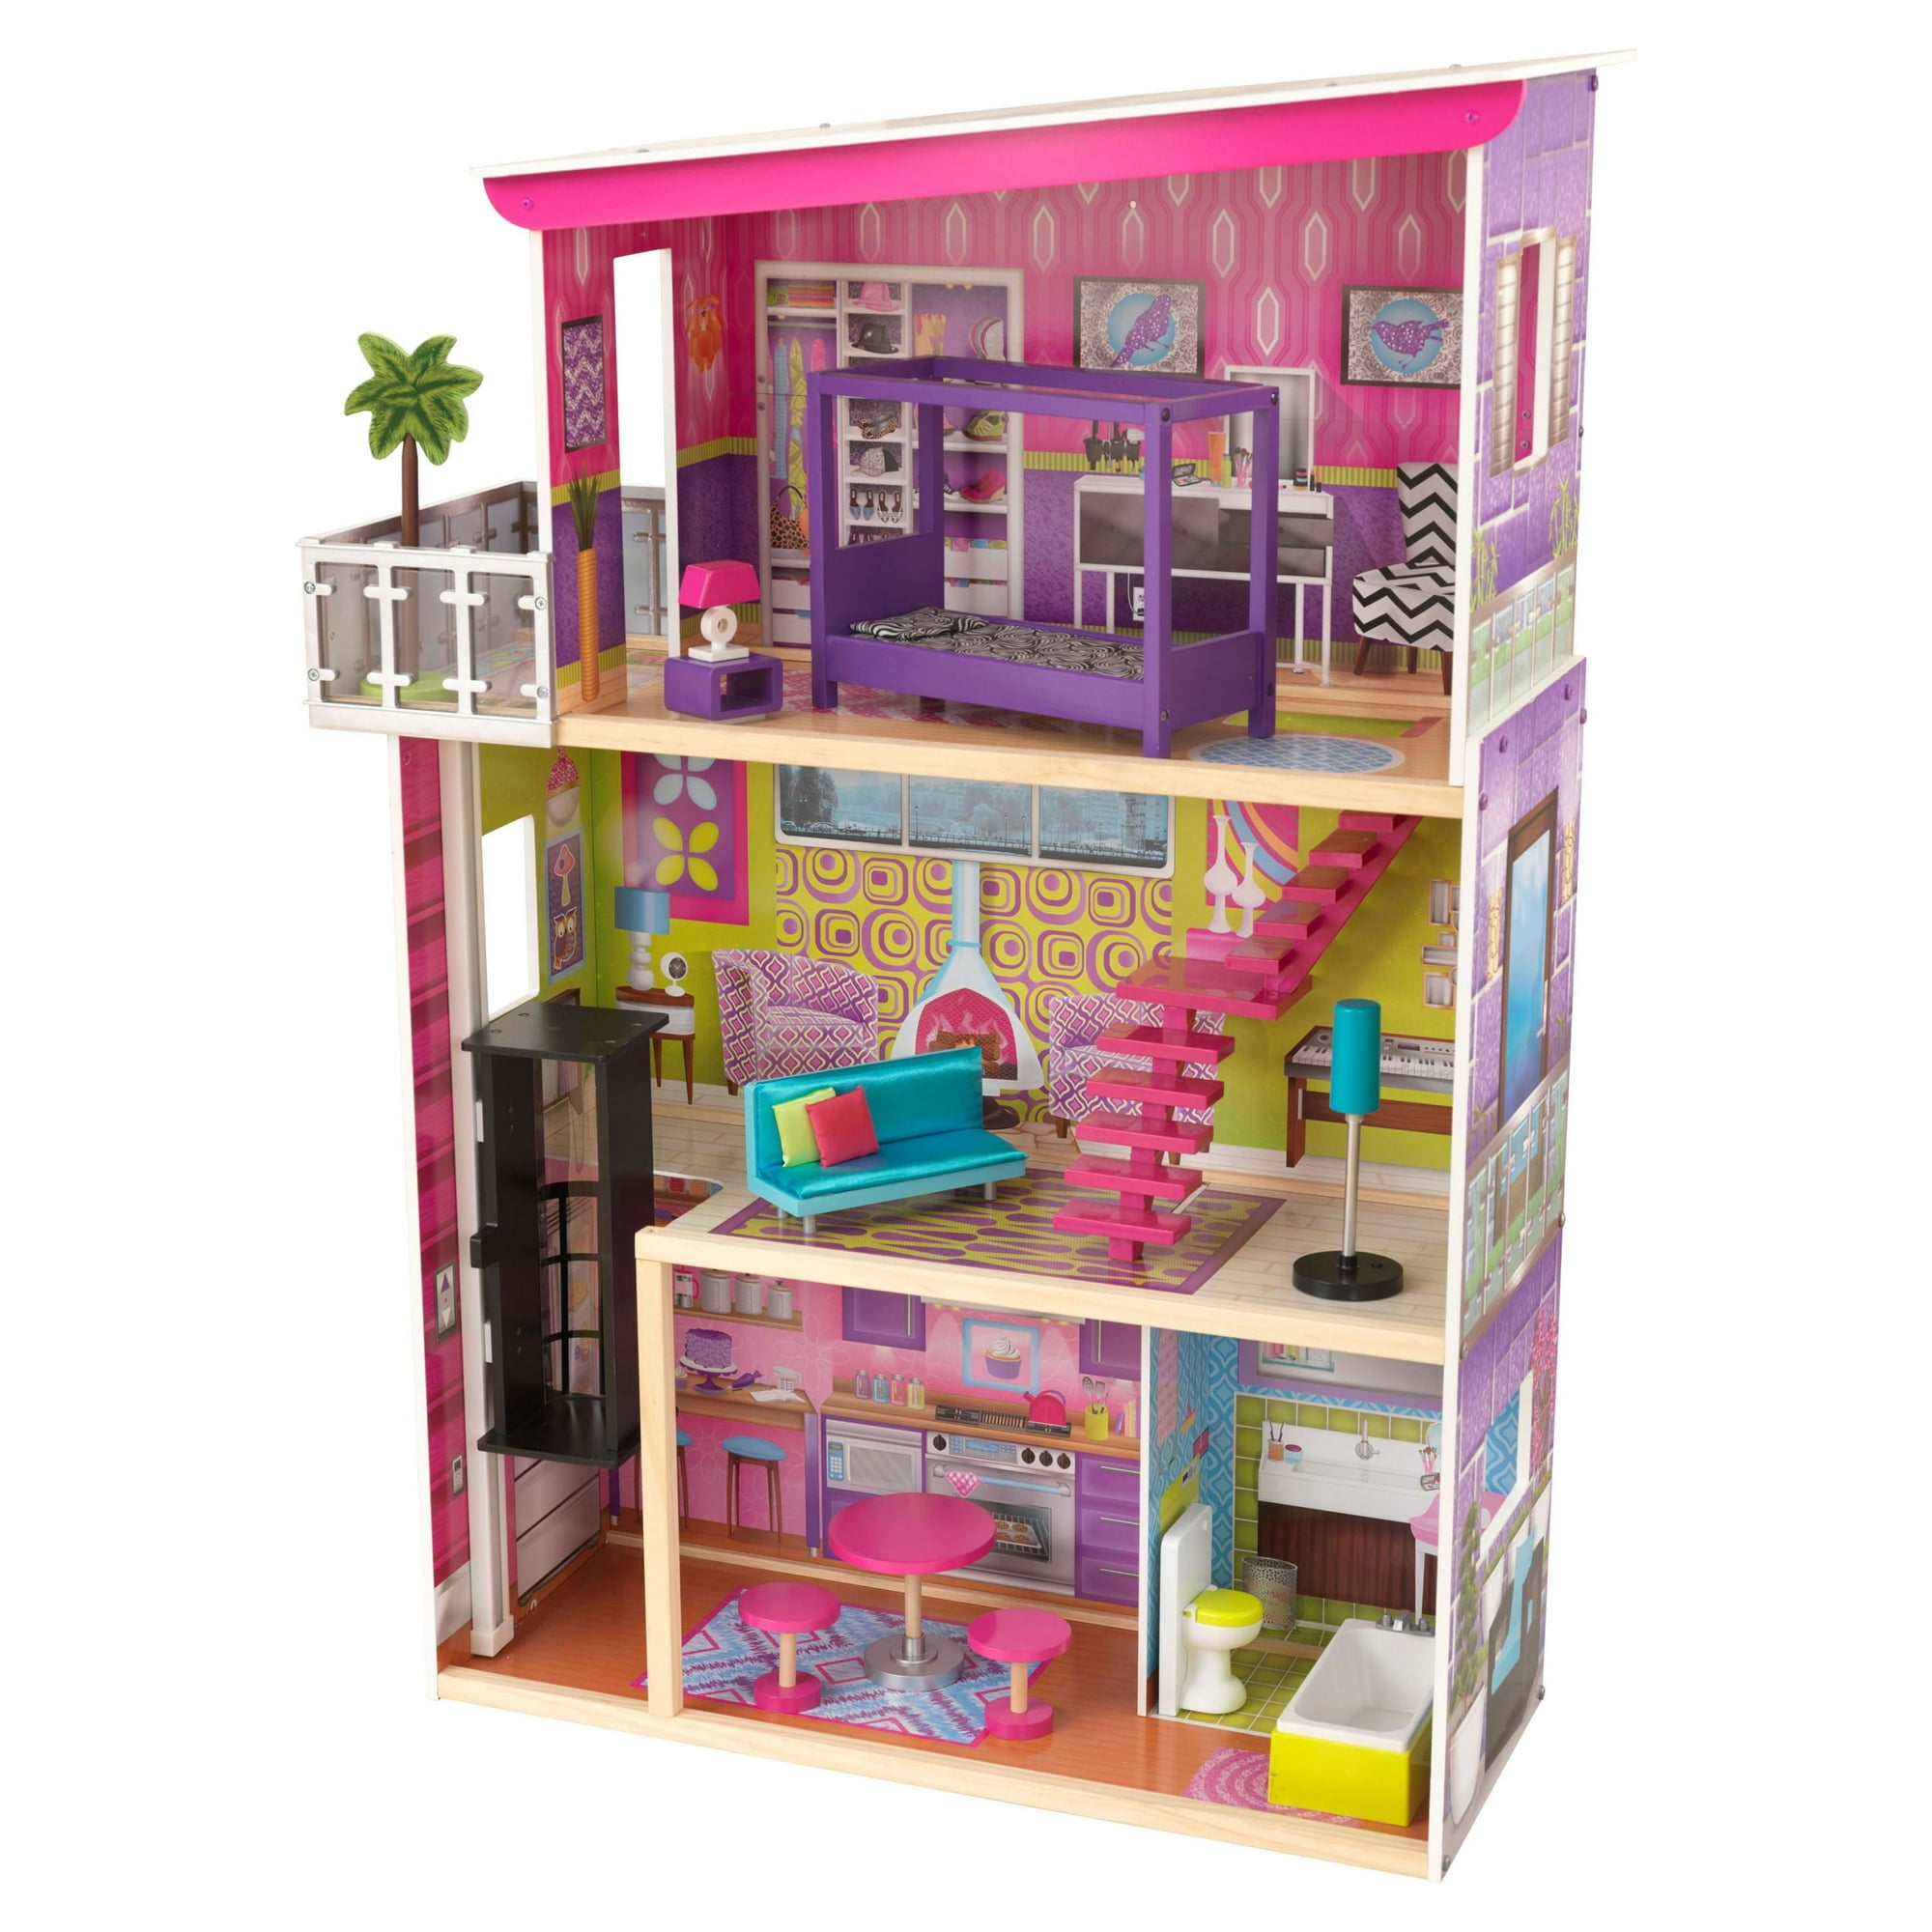 KidKraft Wooden Dollhouse Playsets: Super Model Wooden Dollhouse w/ Elevator